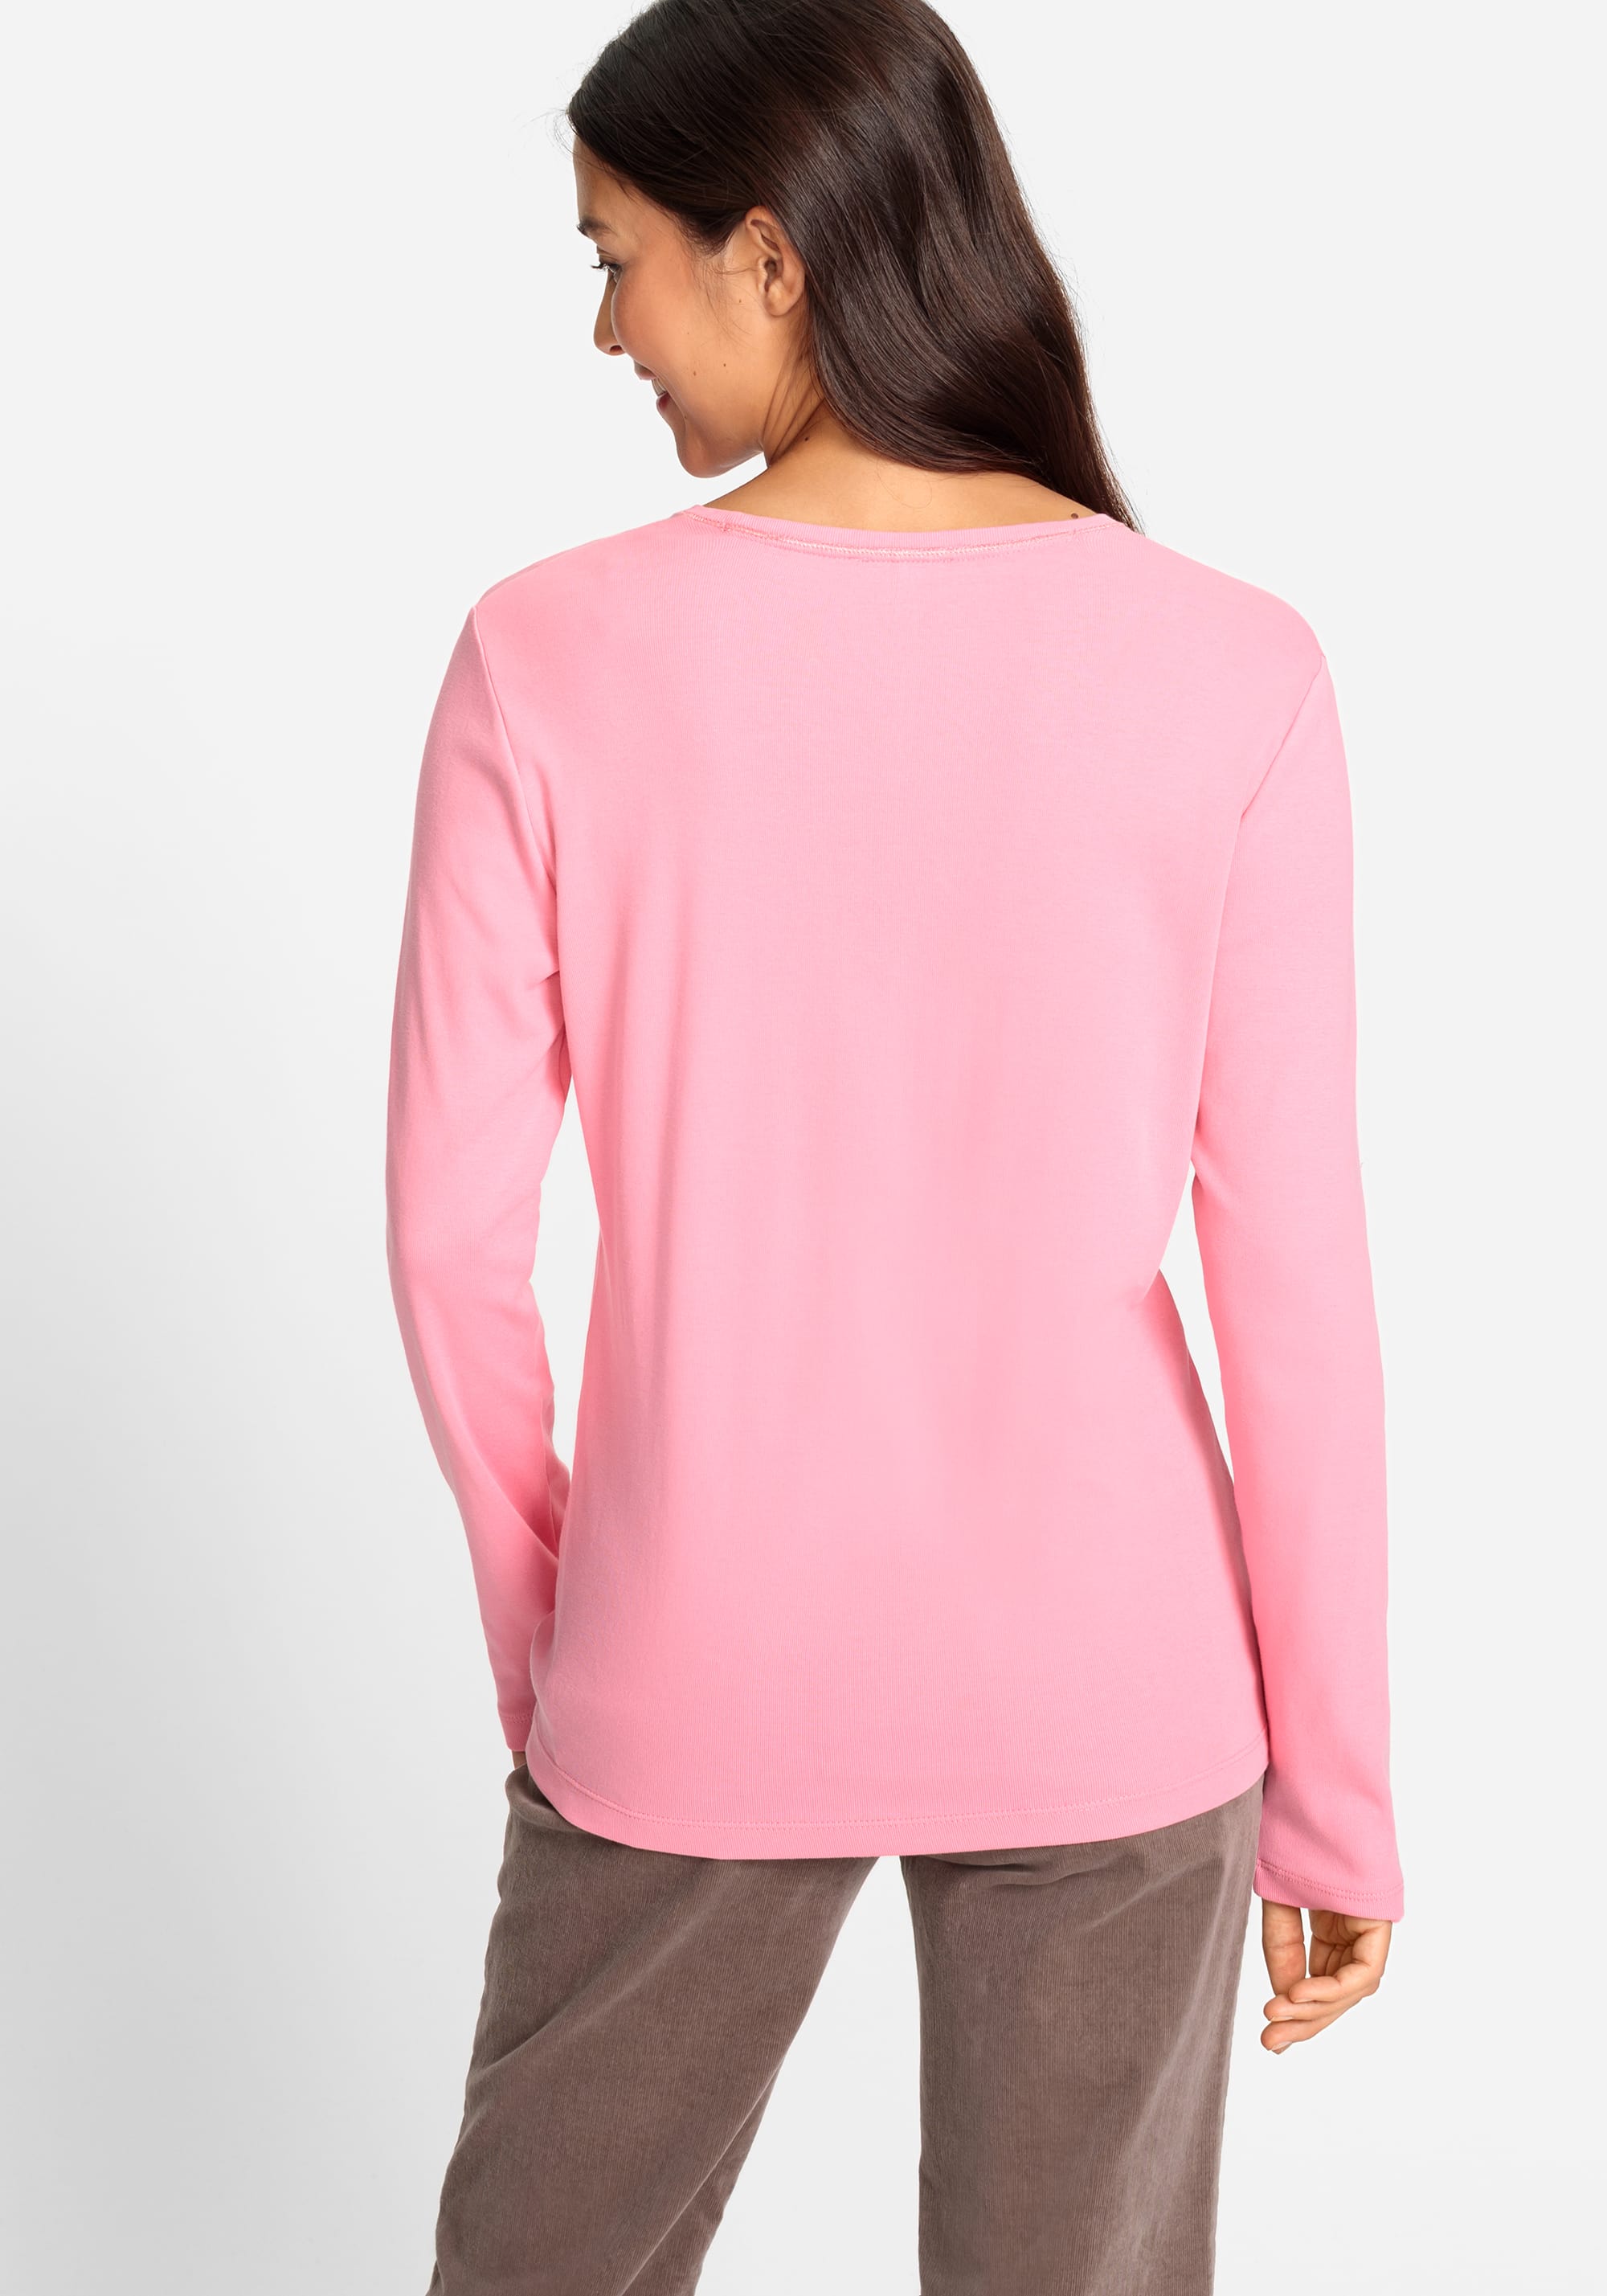 100% Cotton Long Sleeve Stripe & Placement Print Jersey Top - Olsen Fashion  Canada